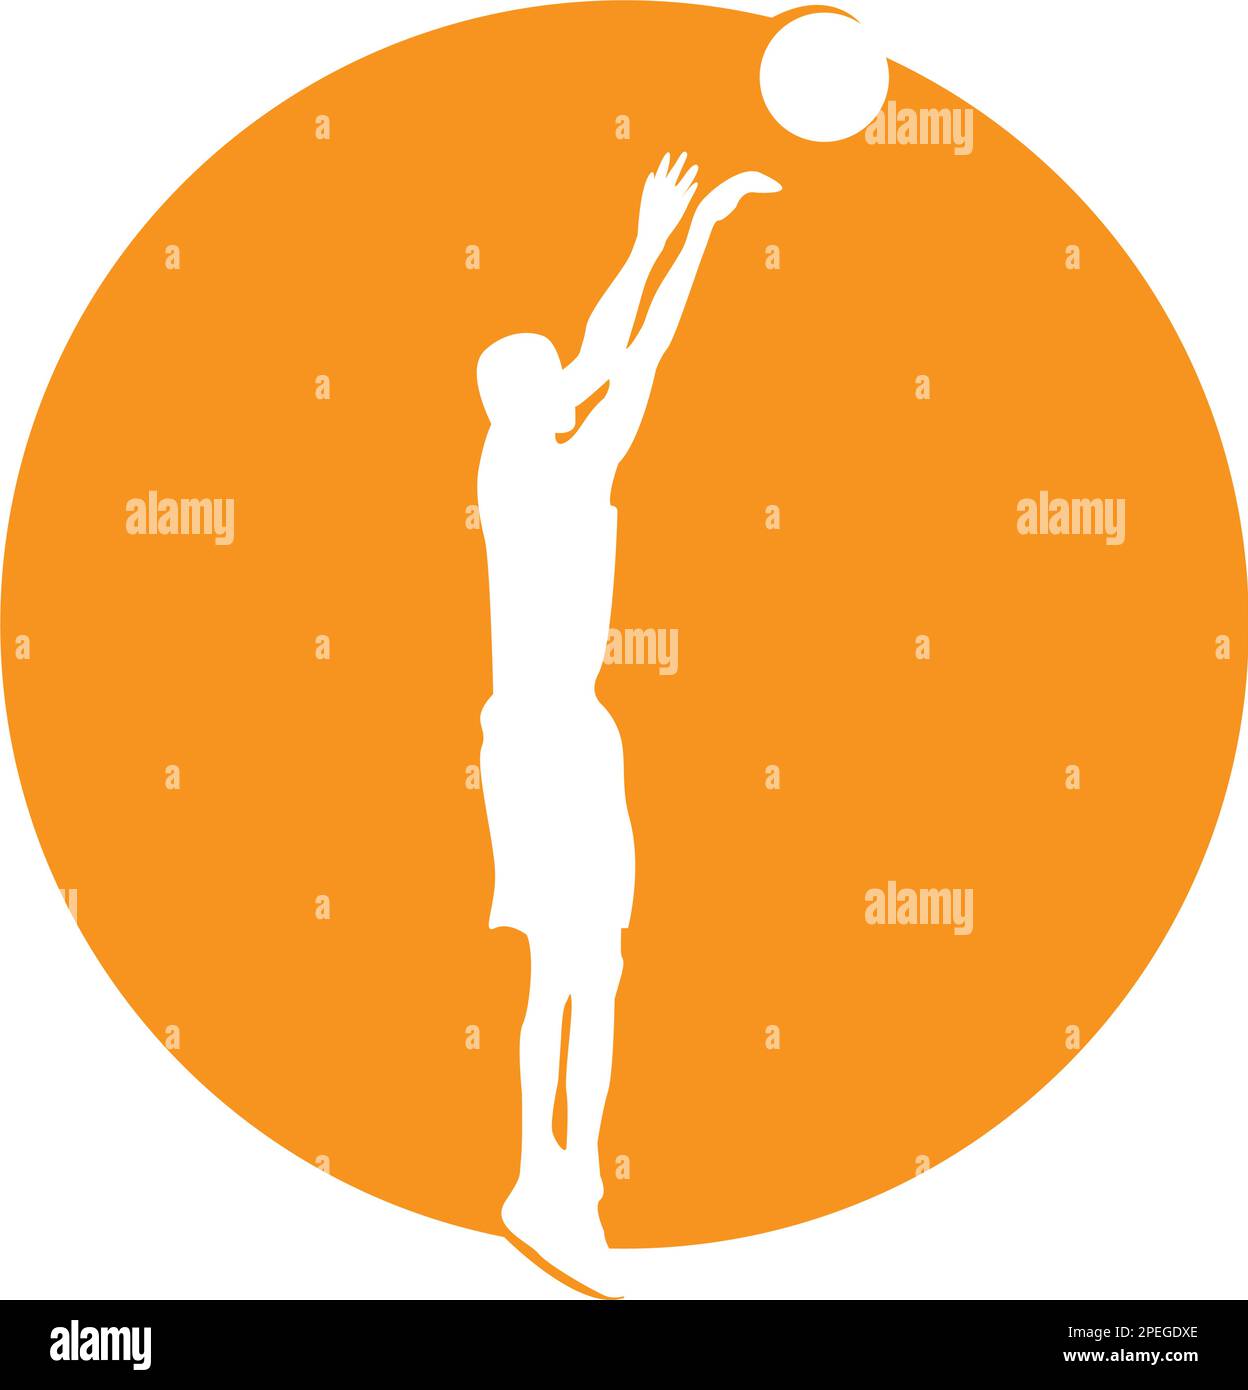 basketball dribbling logo vector illustration design Stock Vector